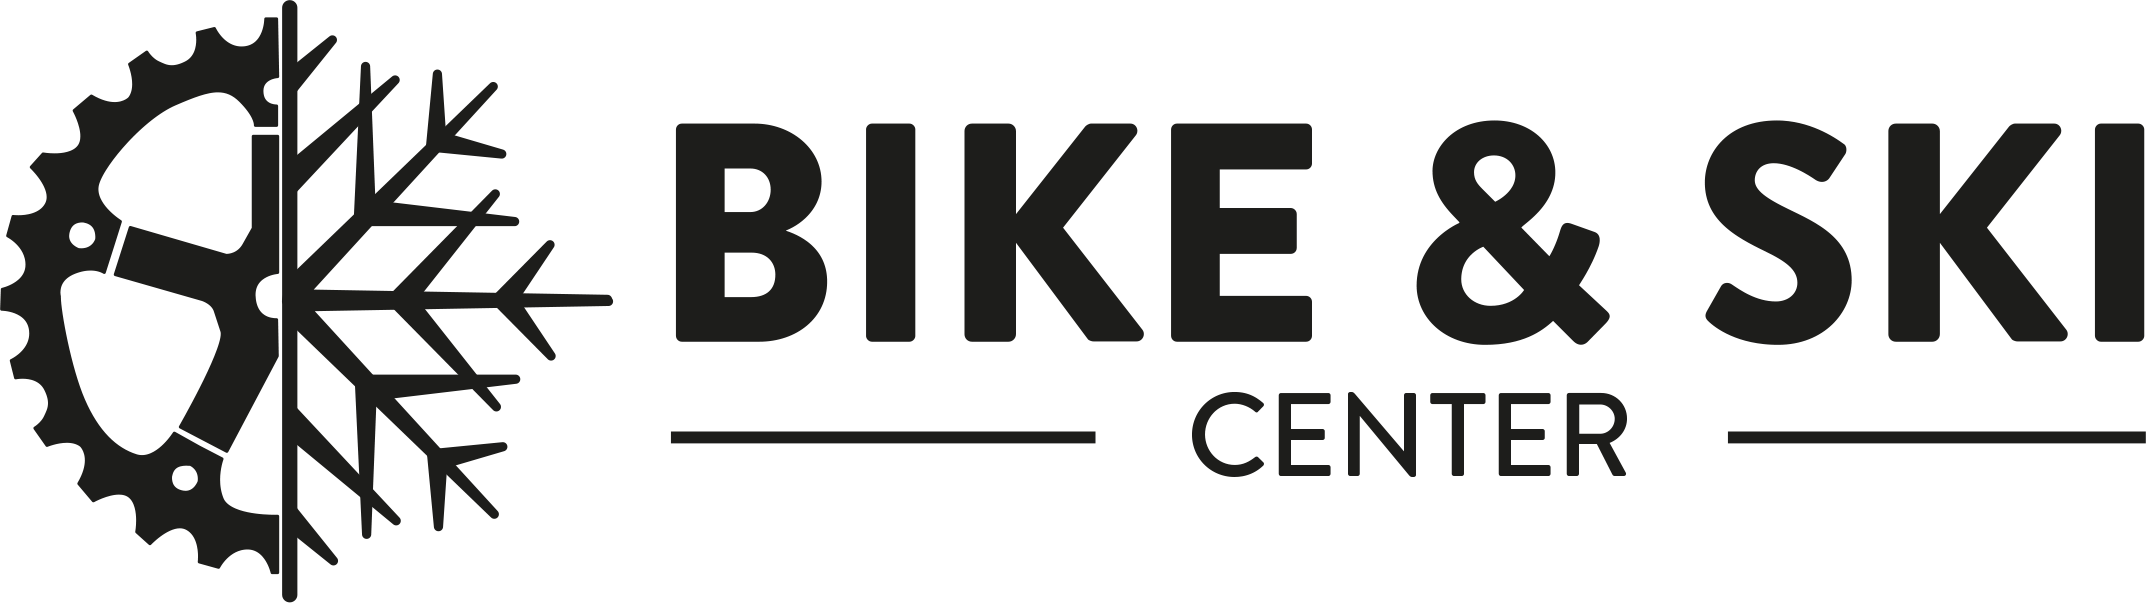 Bike & Ski Center